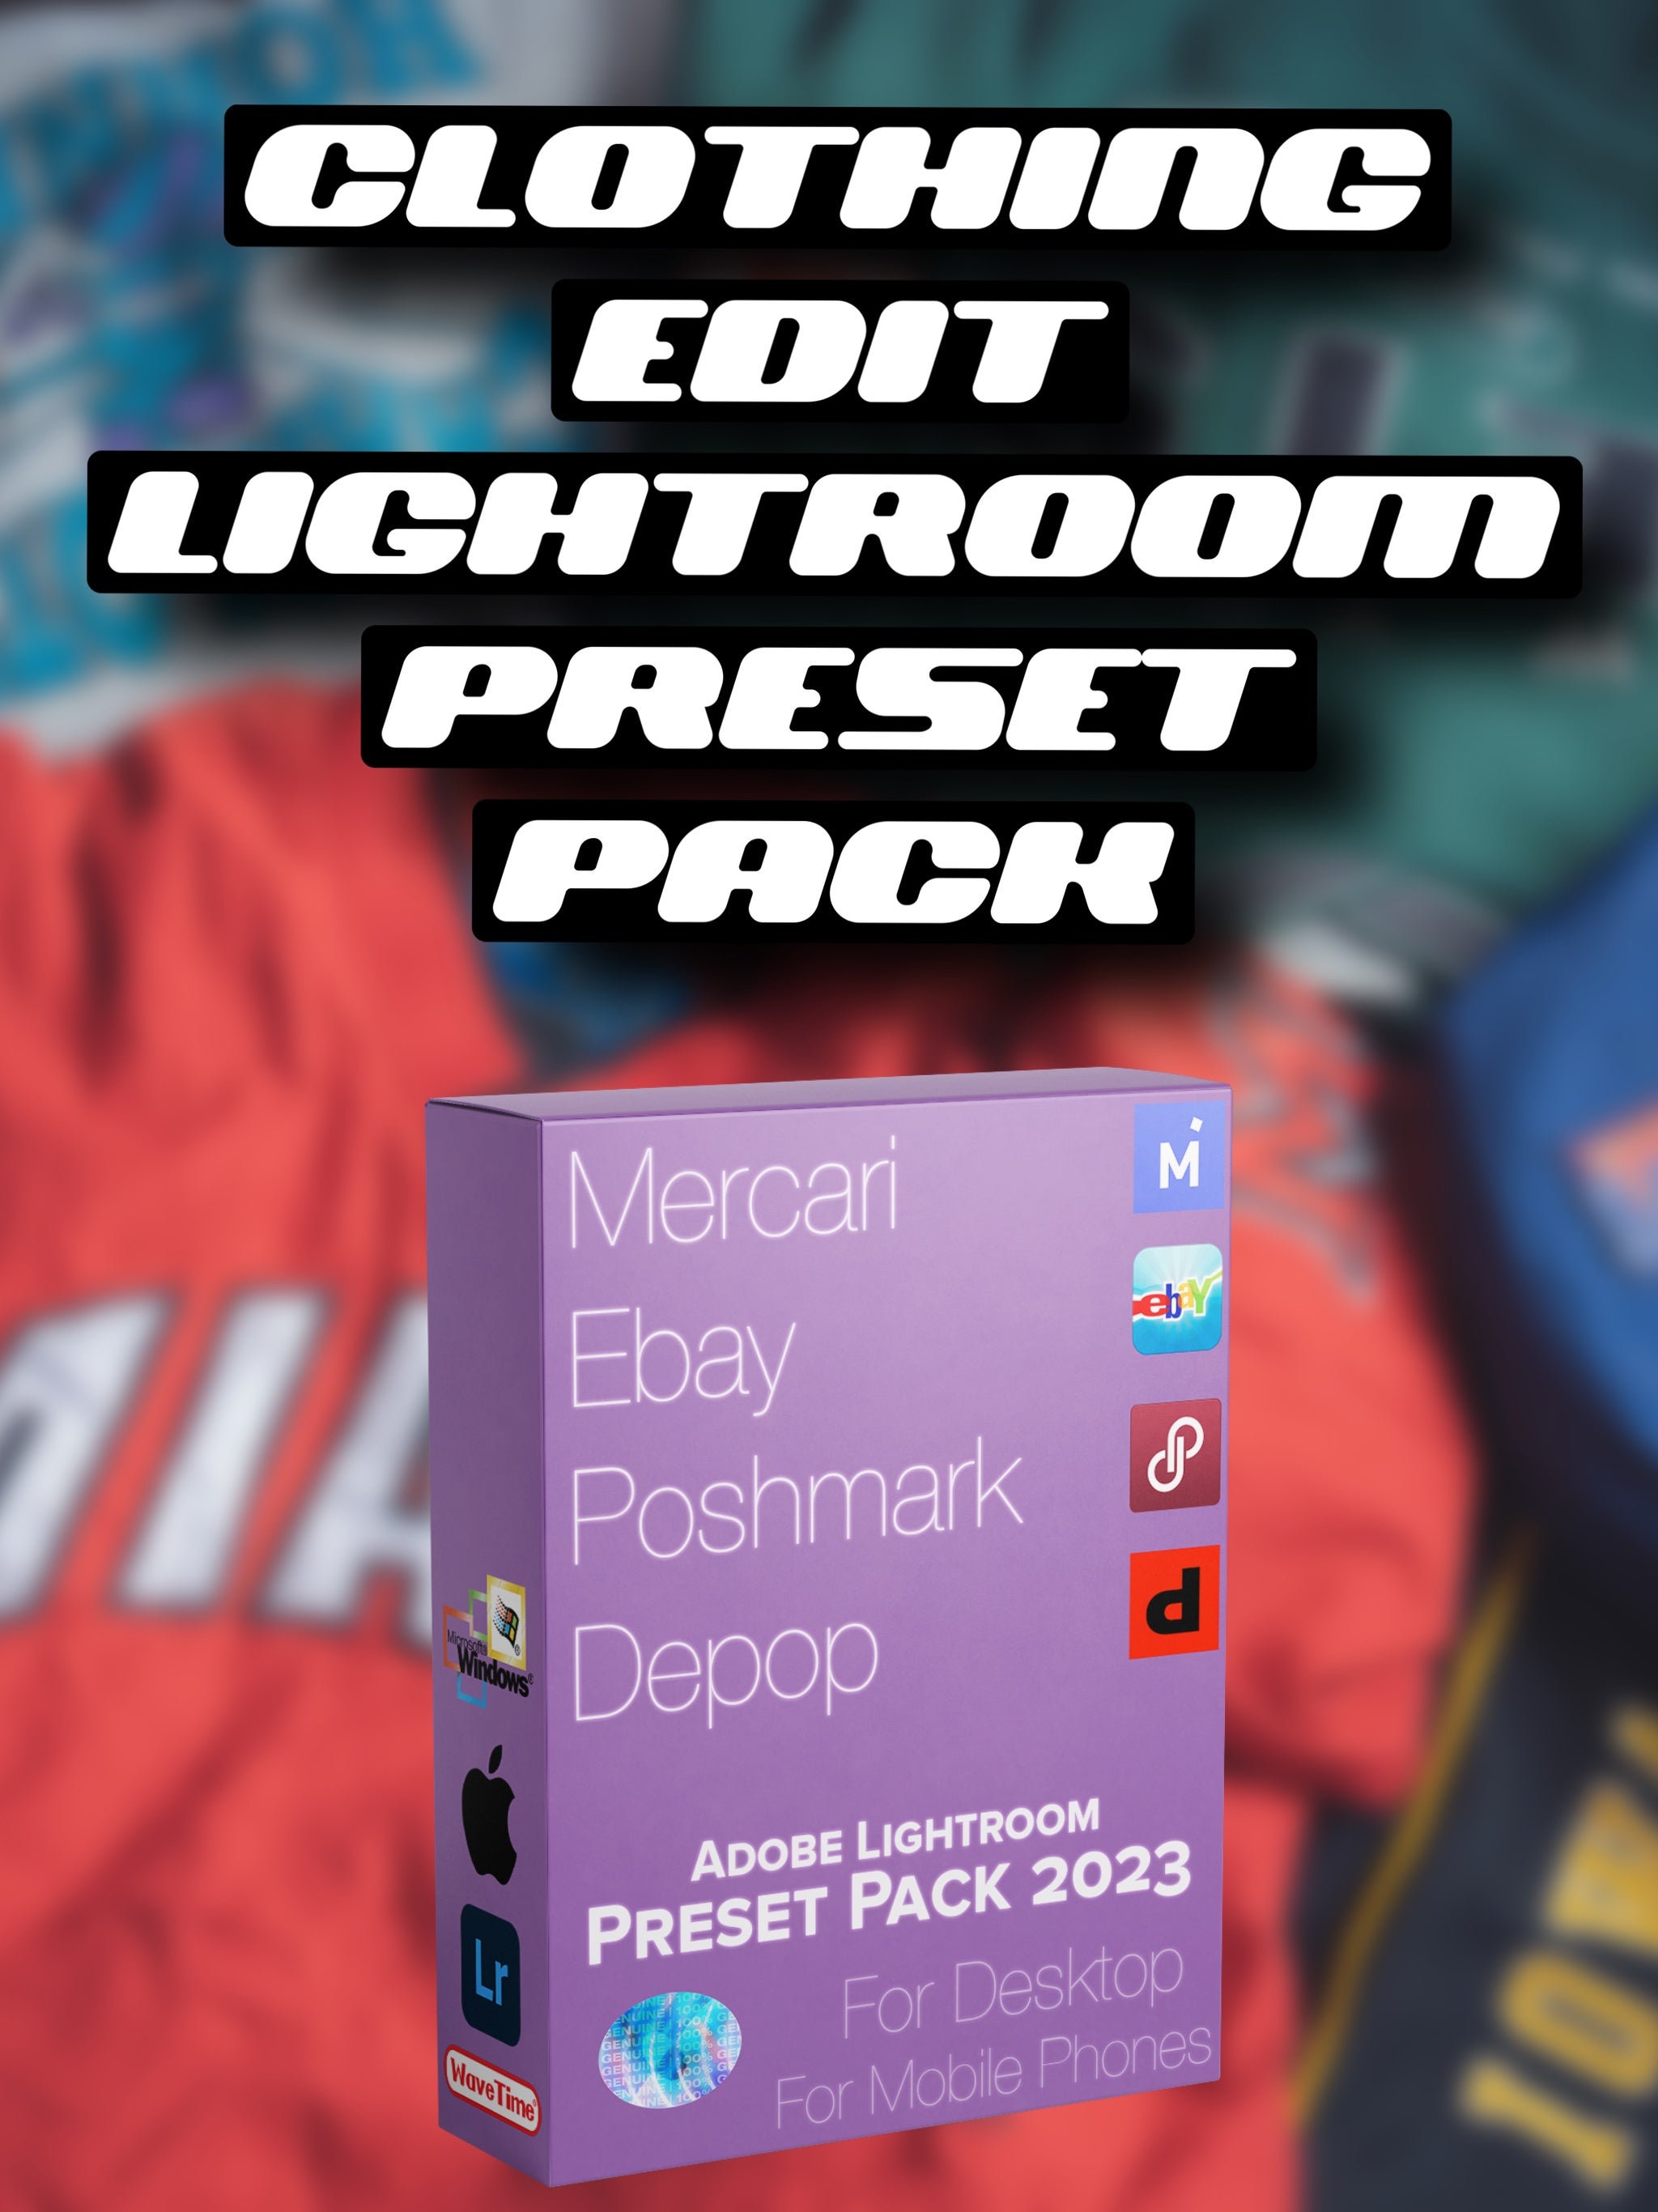 Lightroom Clothing Edit Preset Pack 2023 For Mercari, Ebay, Poshmark, Depop (Mobile and Desktop)